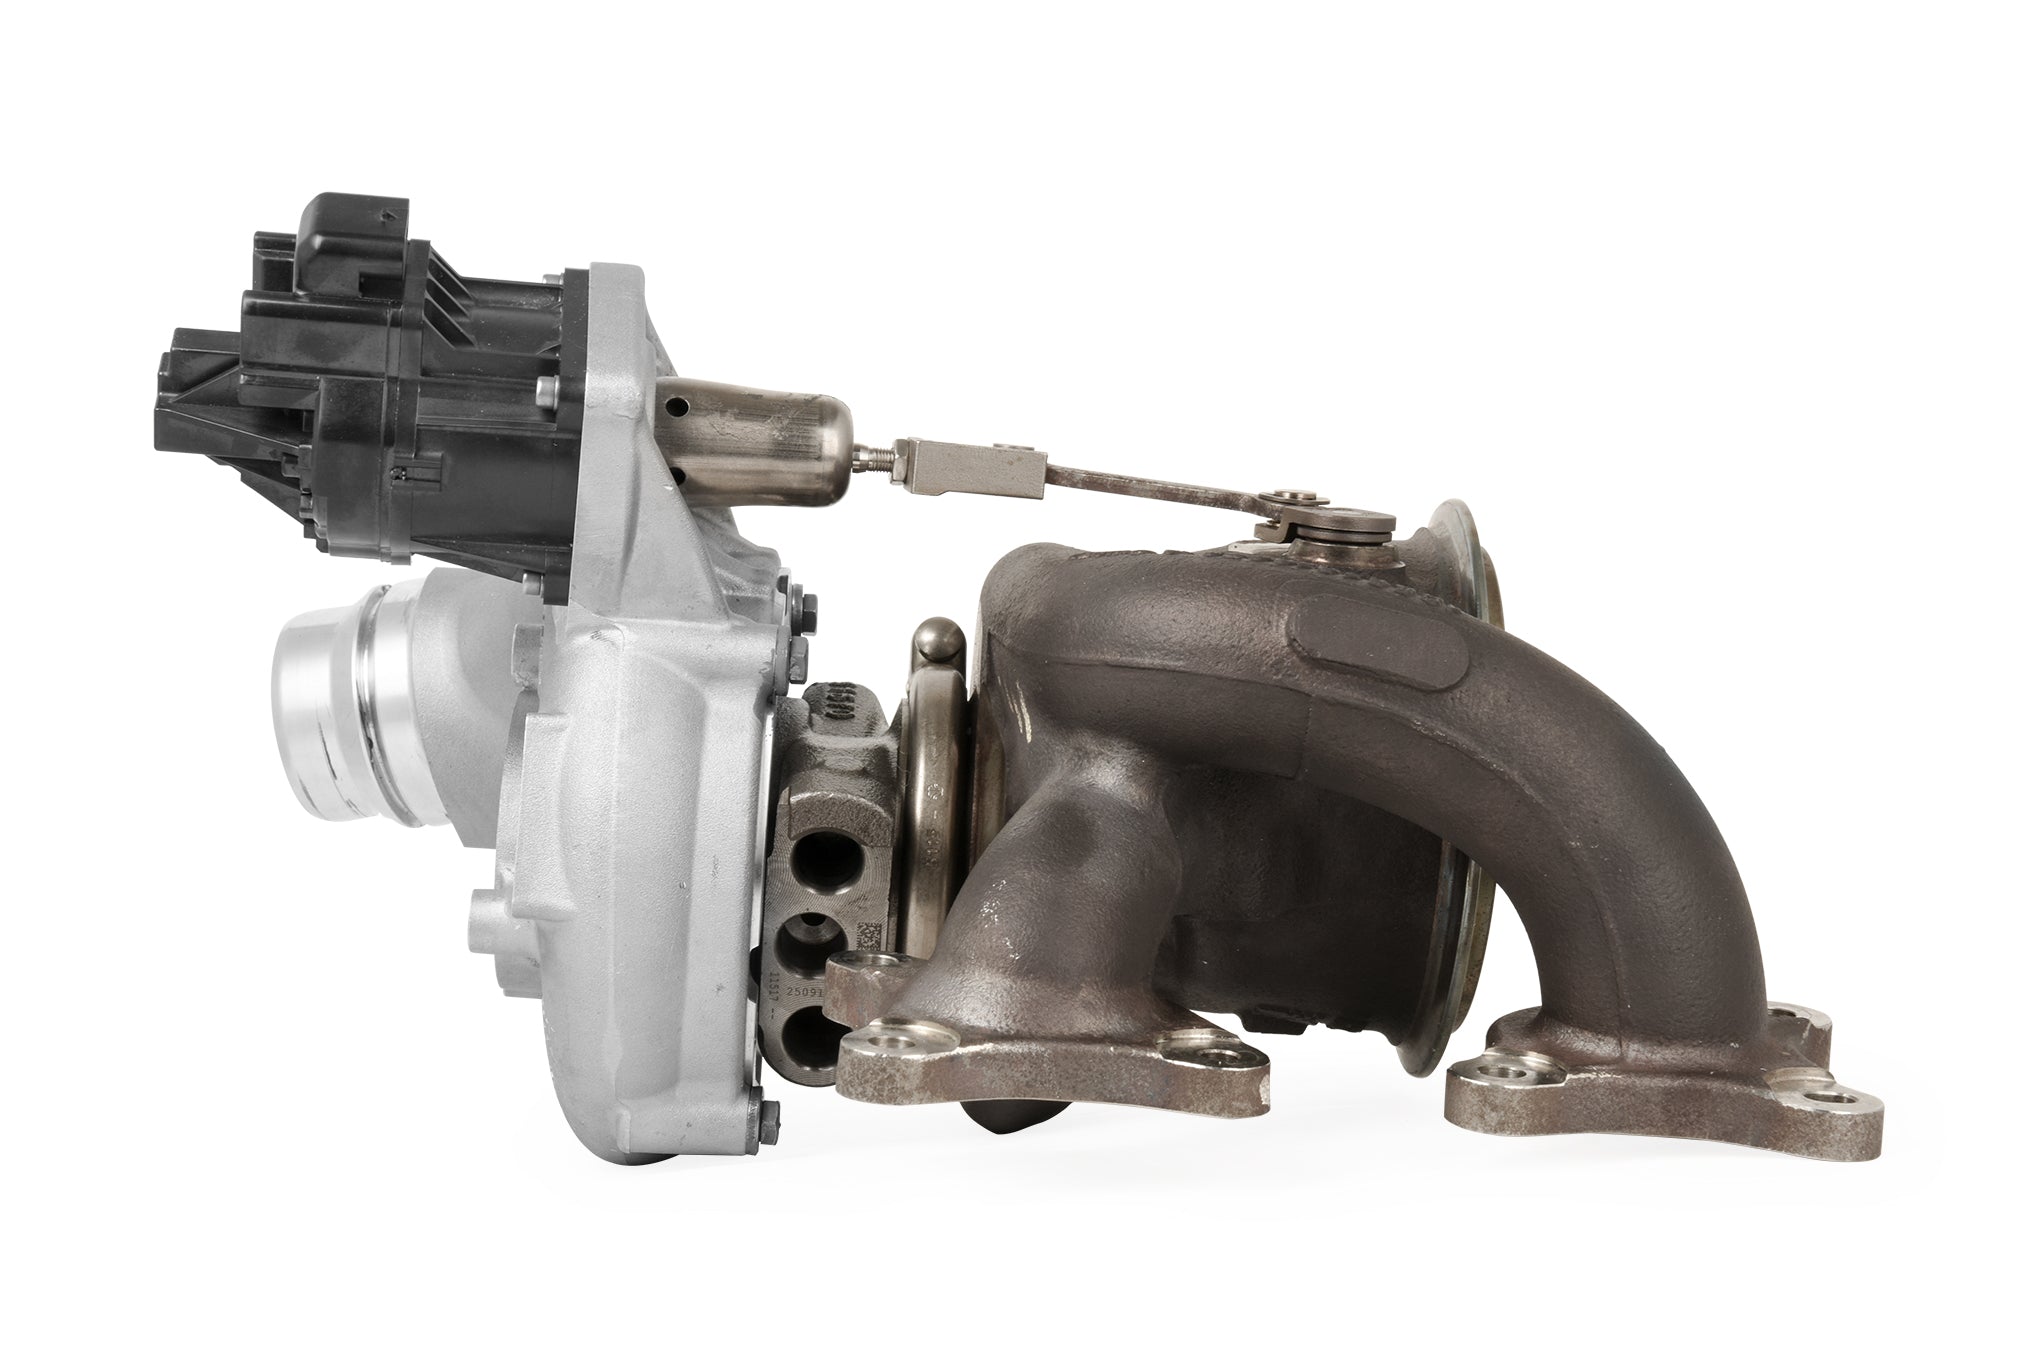 MK5 Supra turbo upgrade